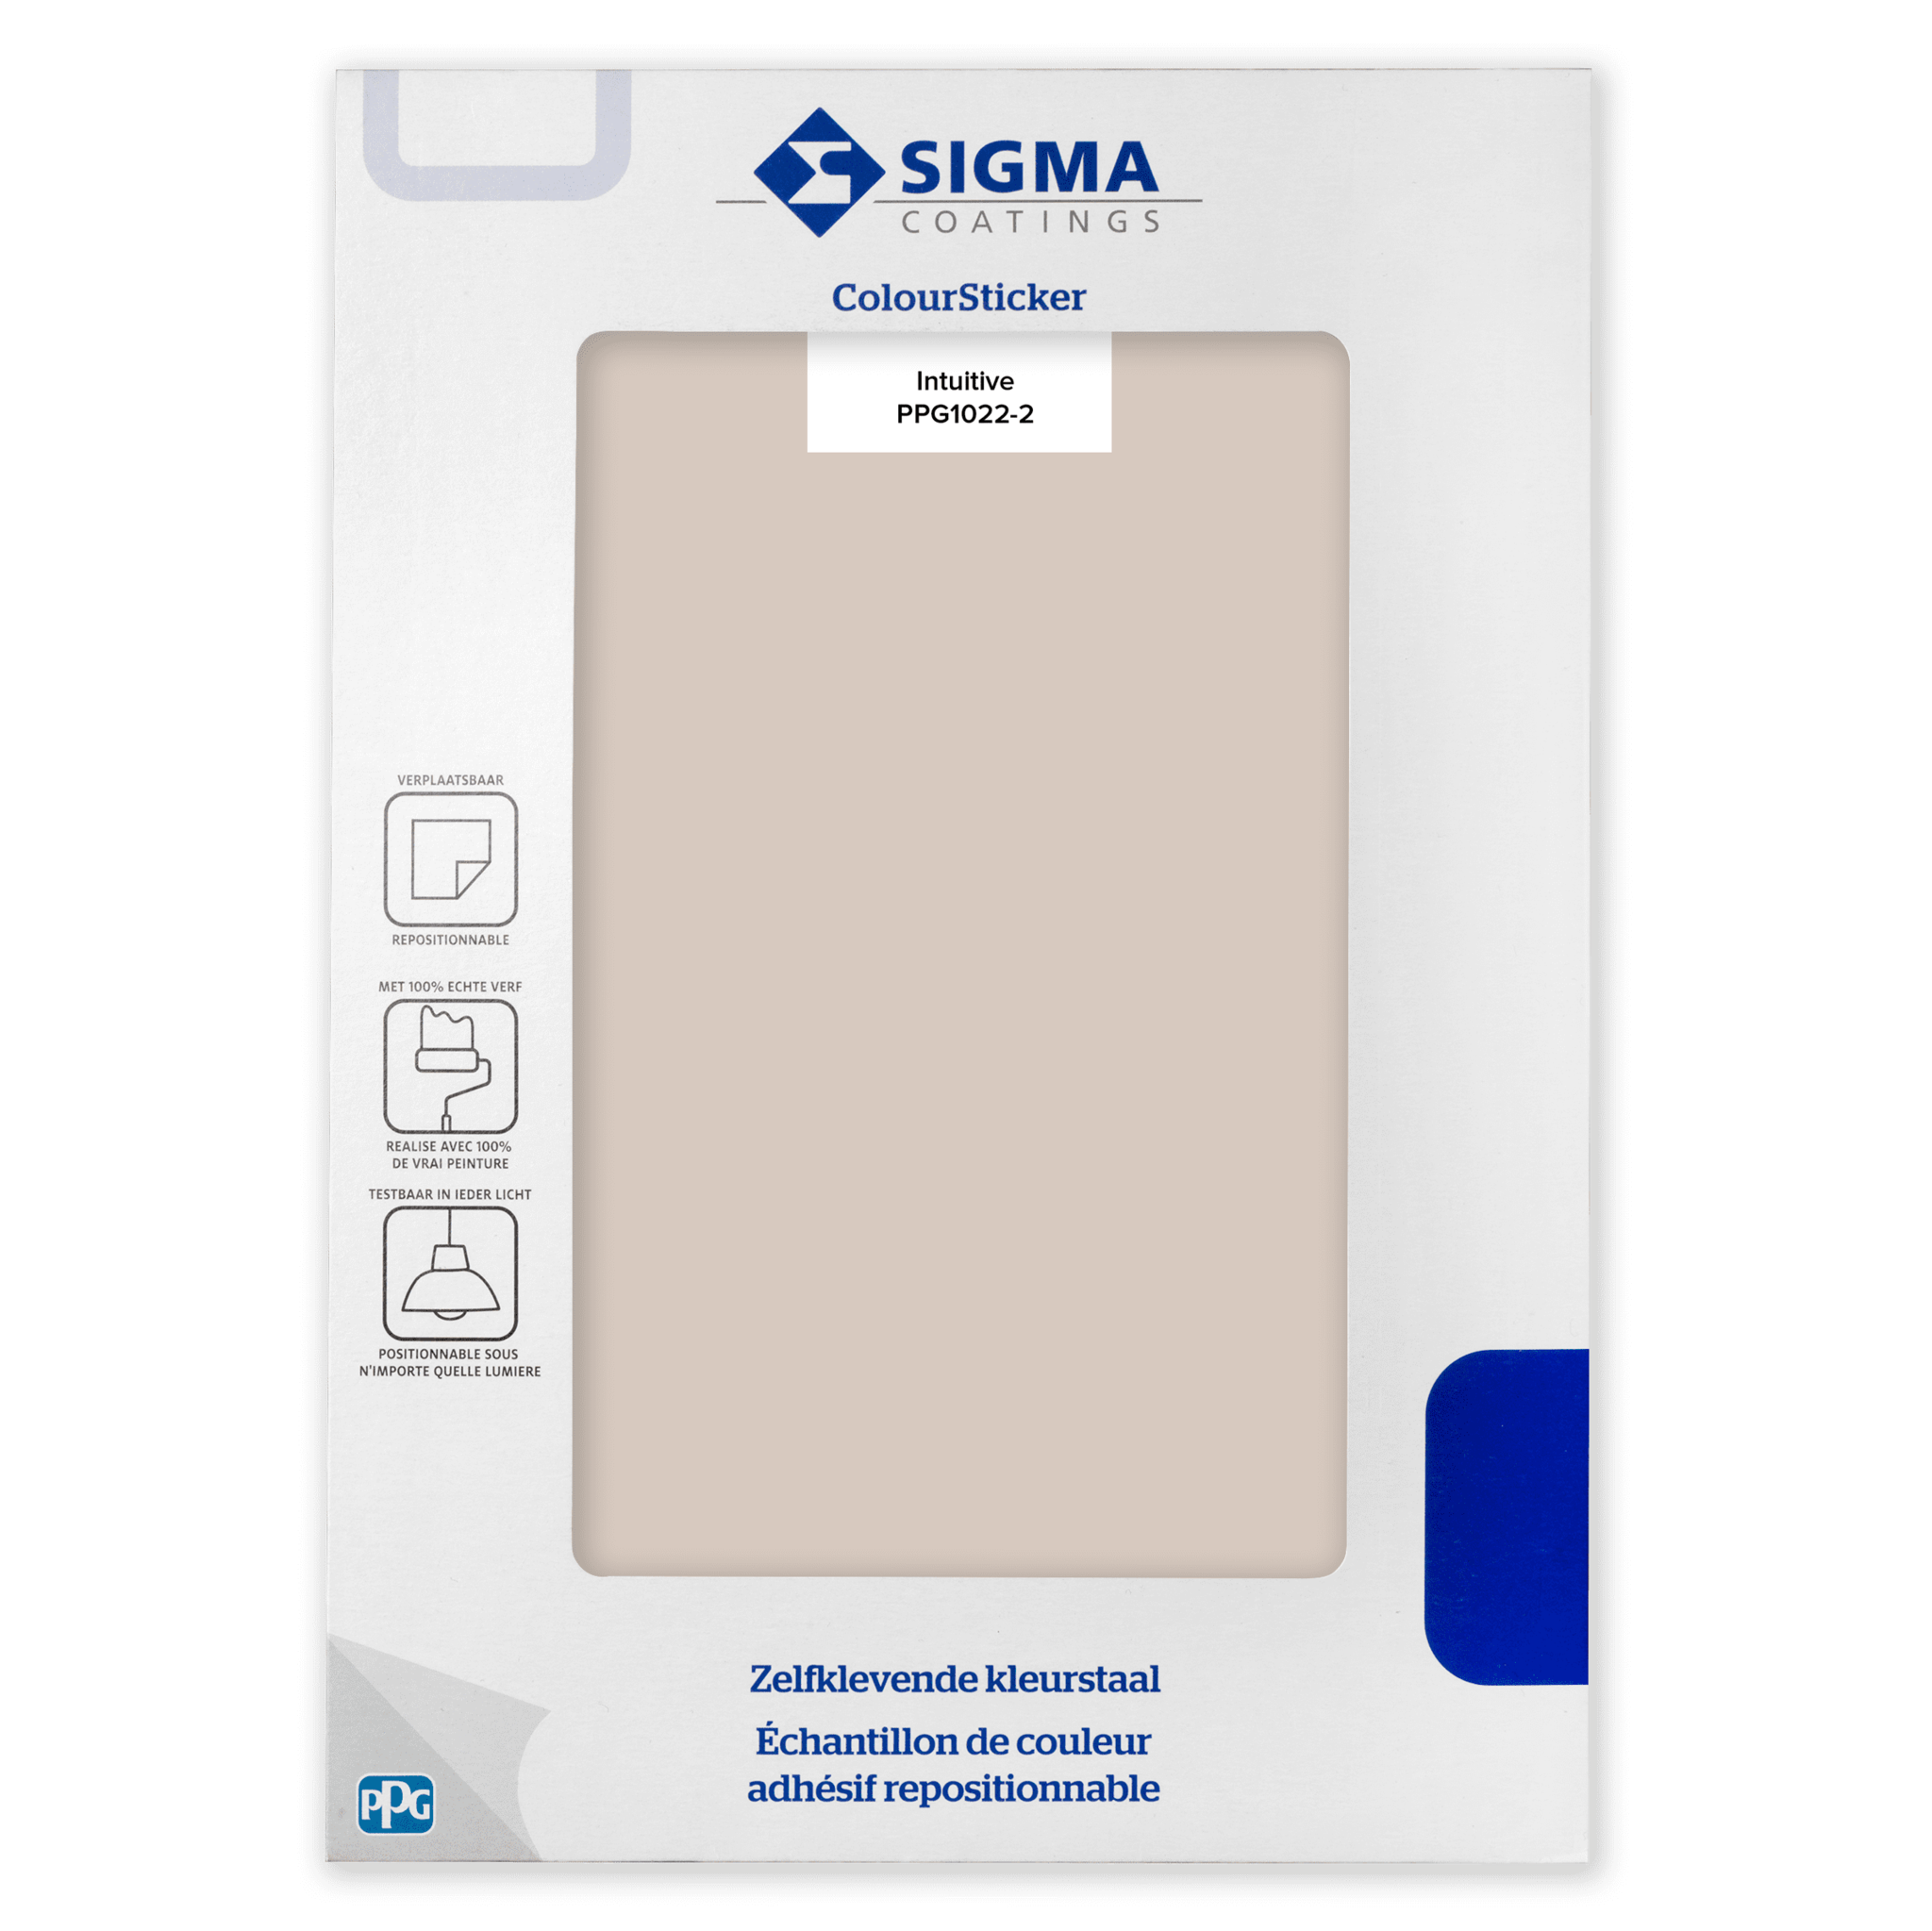 Sigma ColourSticker - Intuitive 1022-2